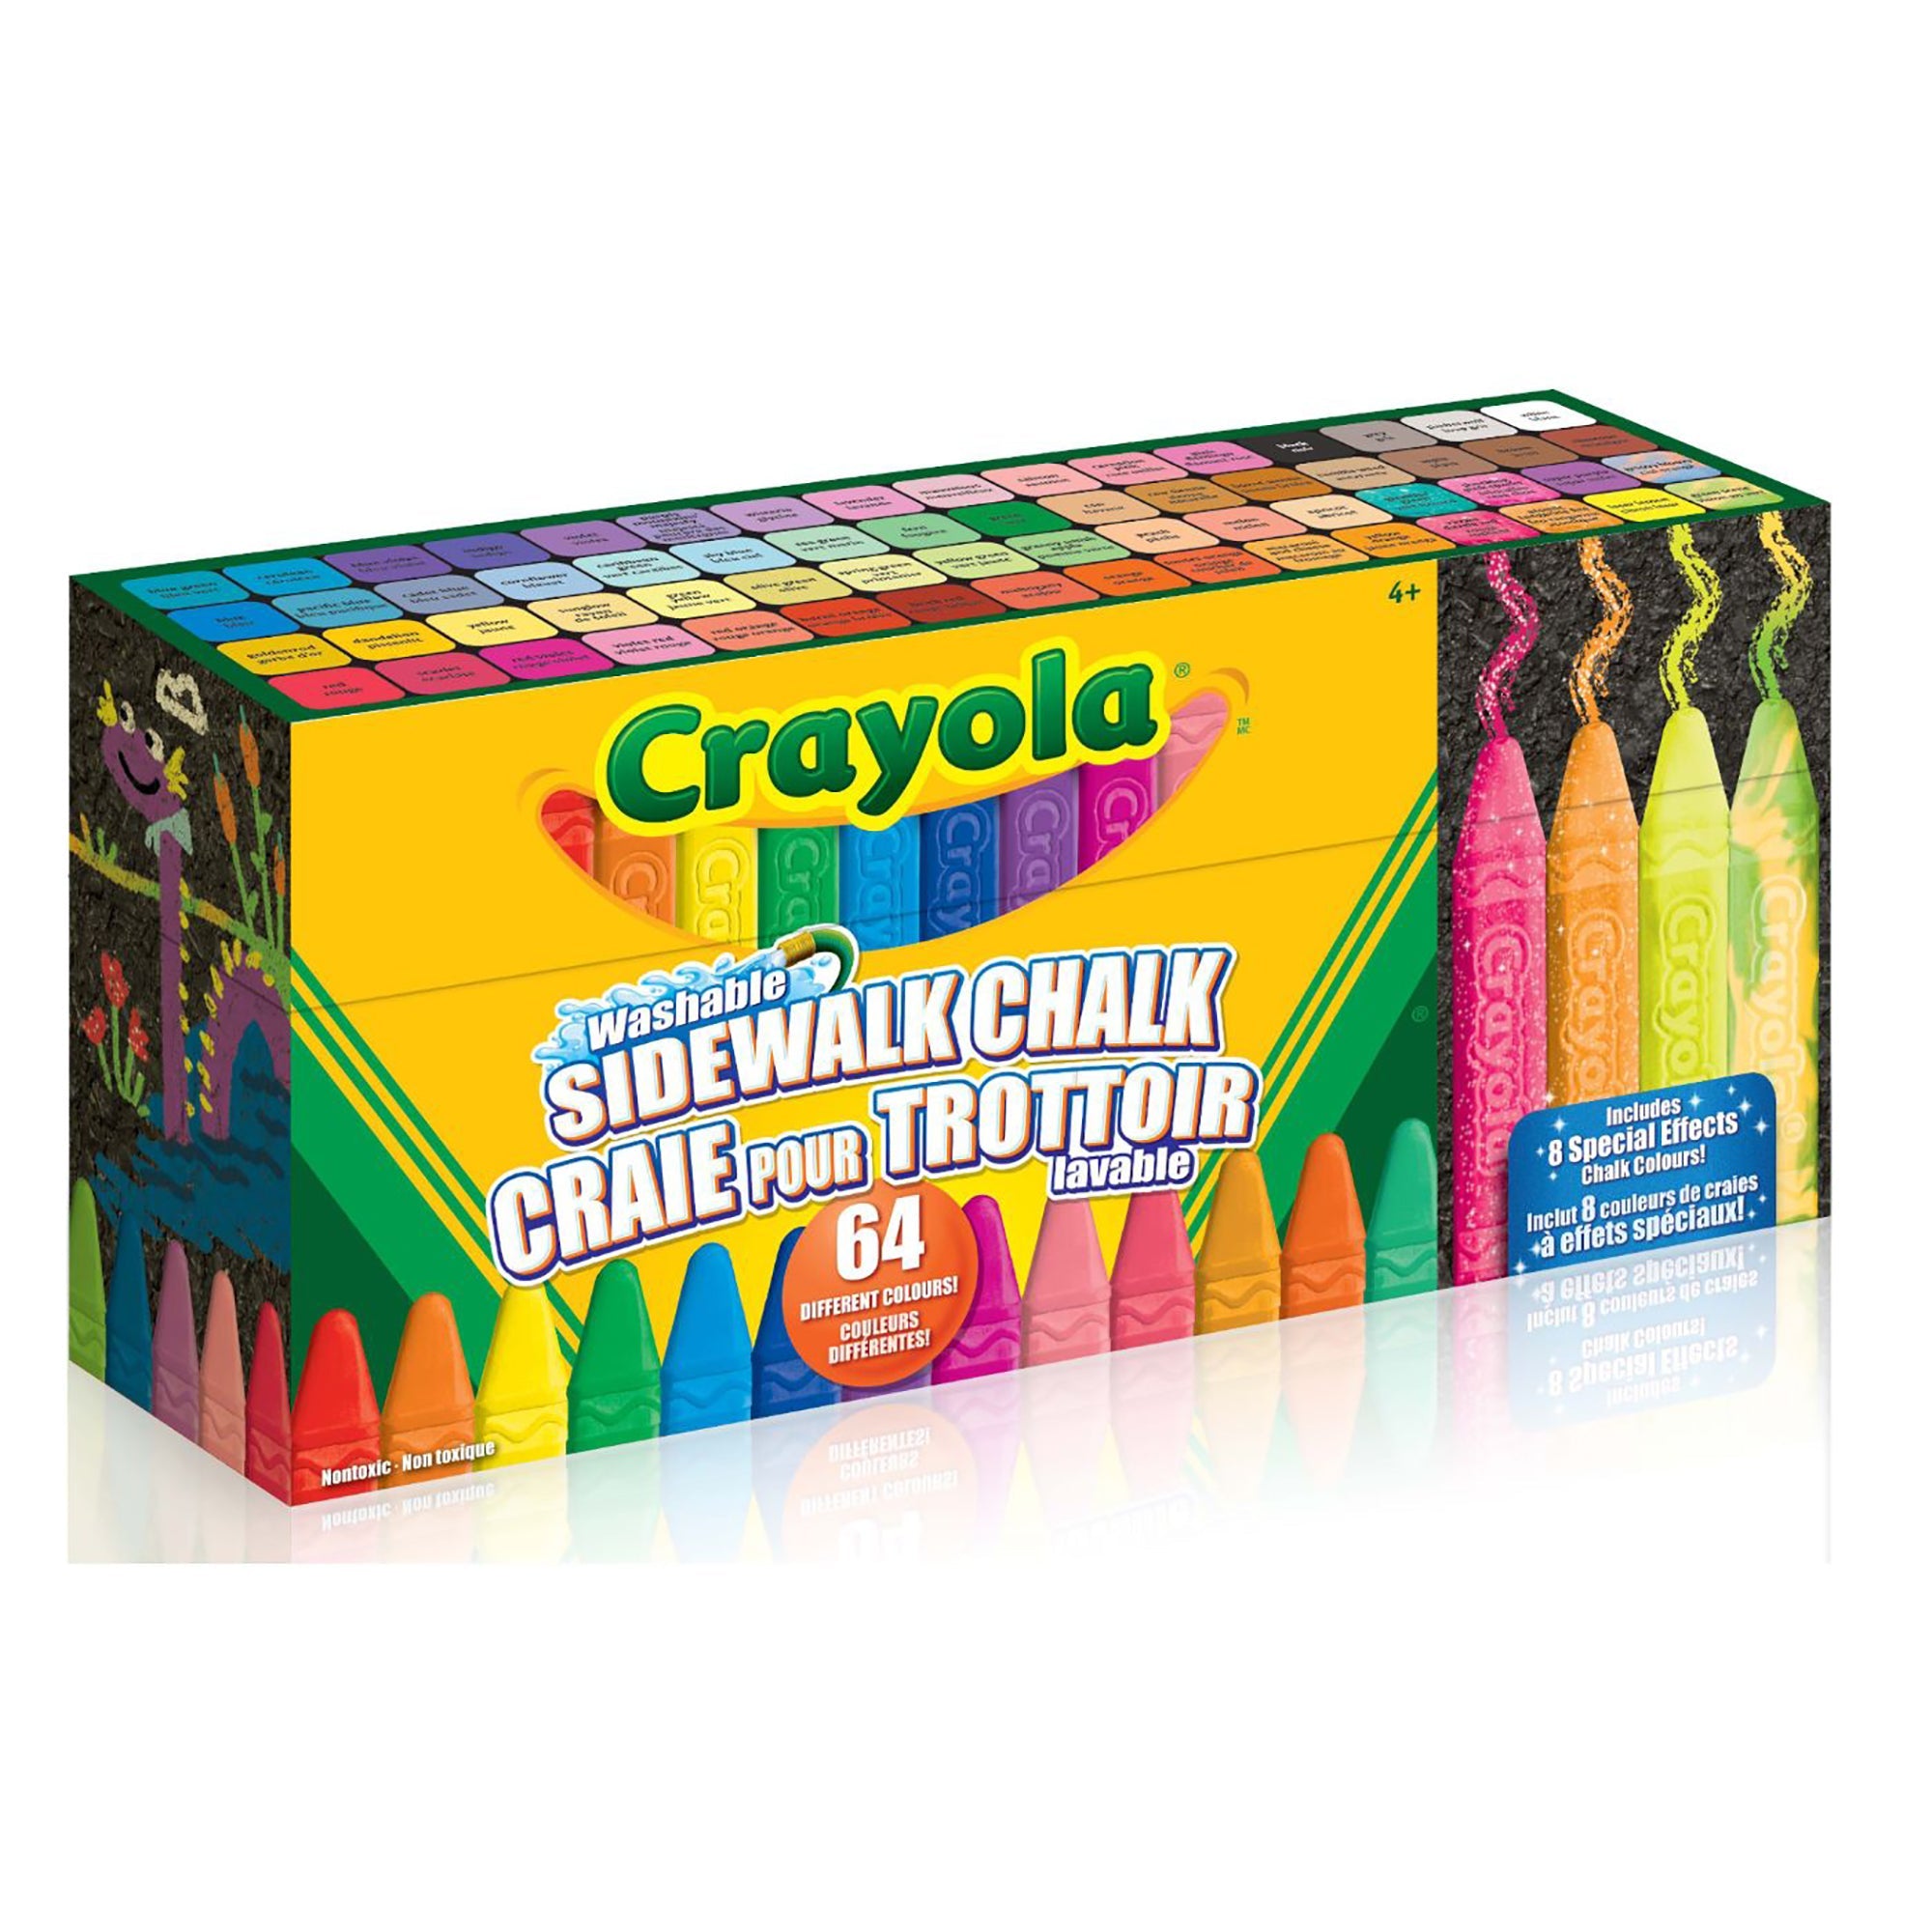 Crayola 64 Sidewalk Chalks - Non-toxic - Washable 4in